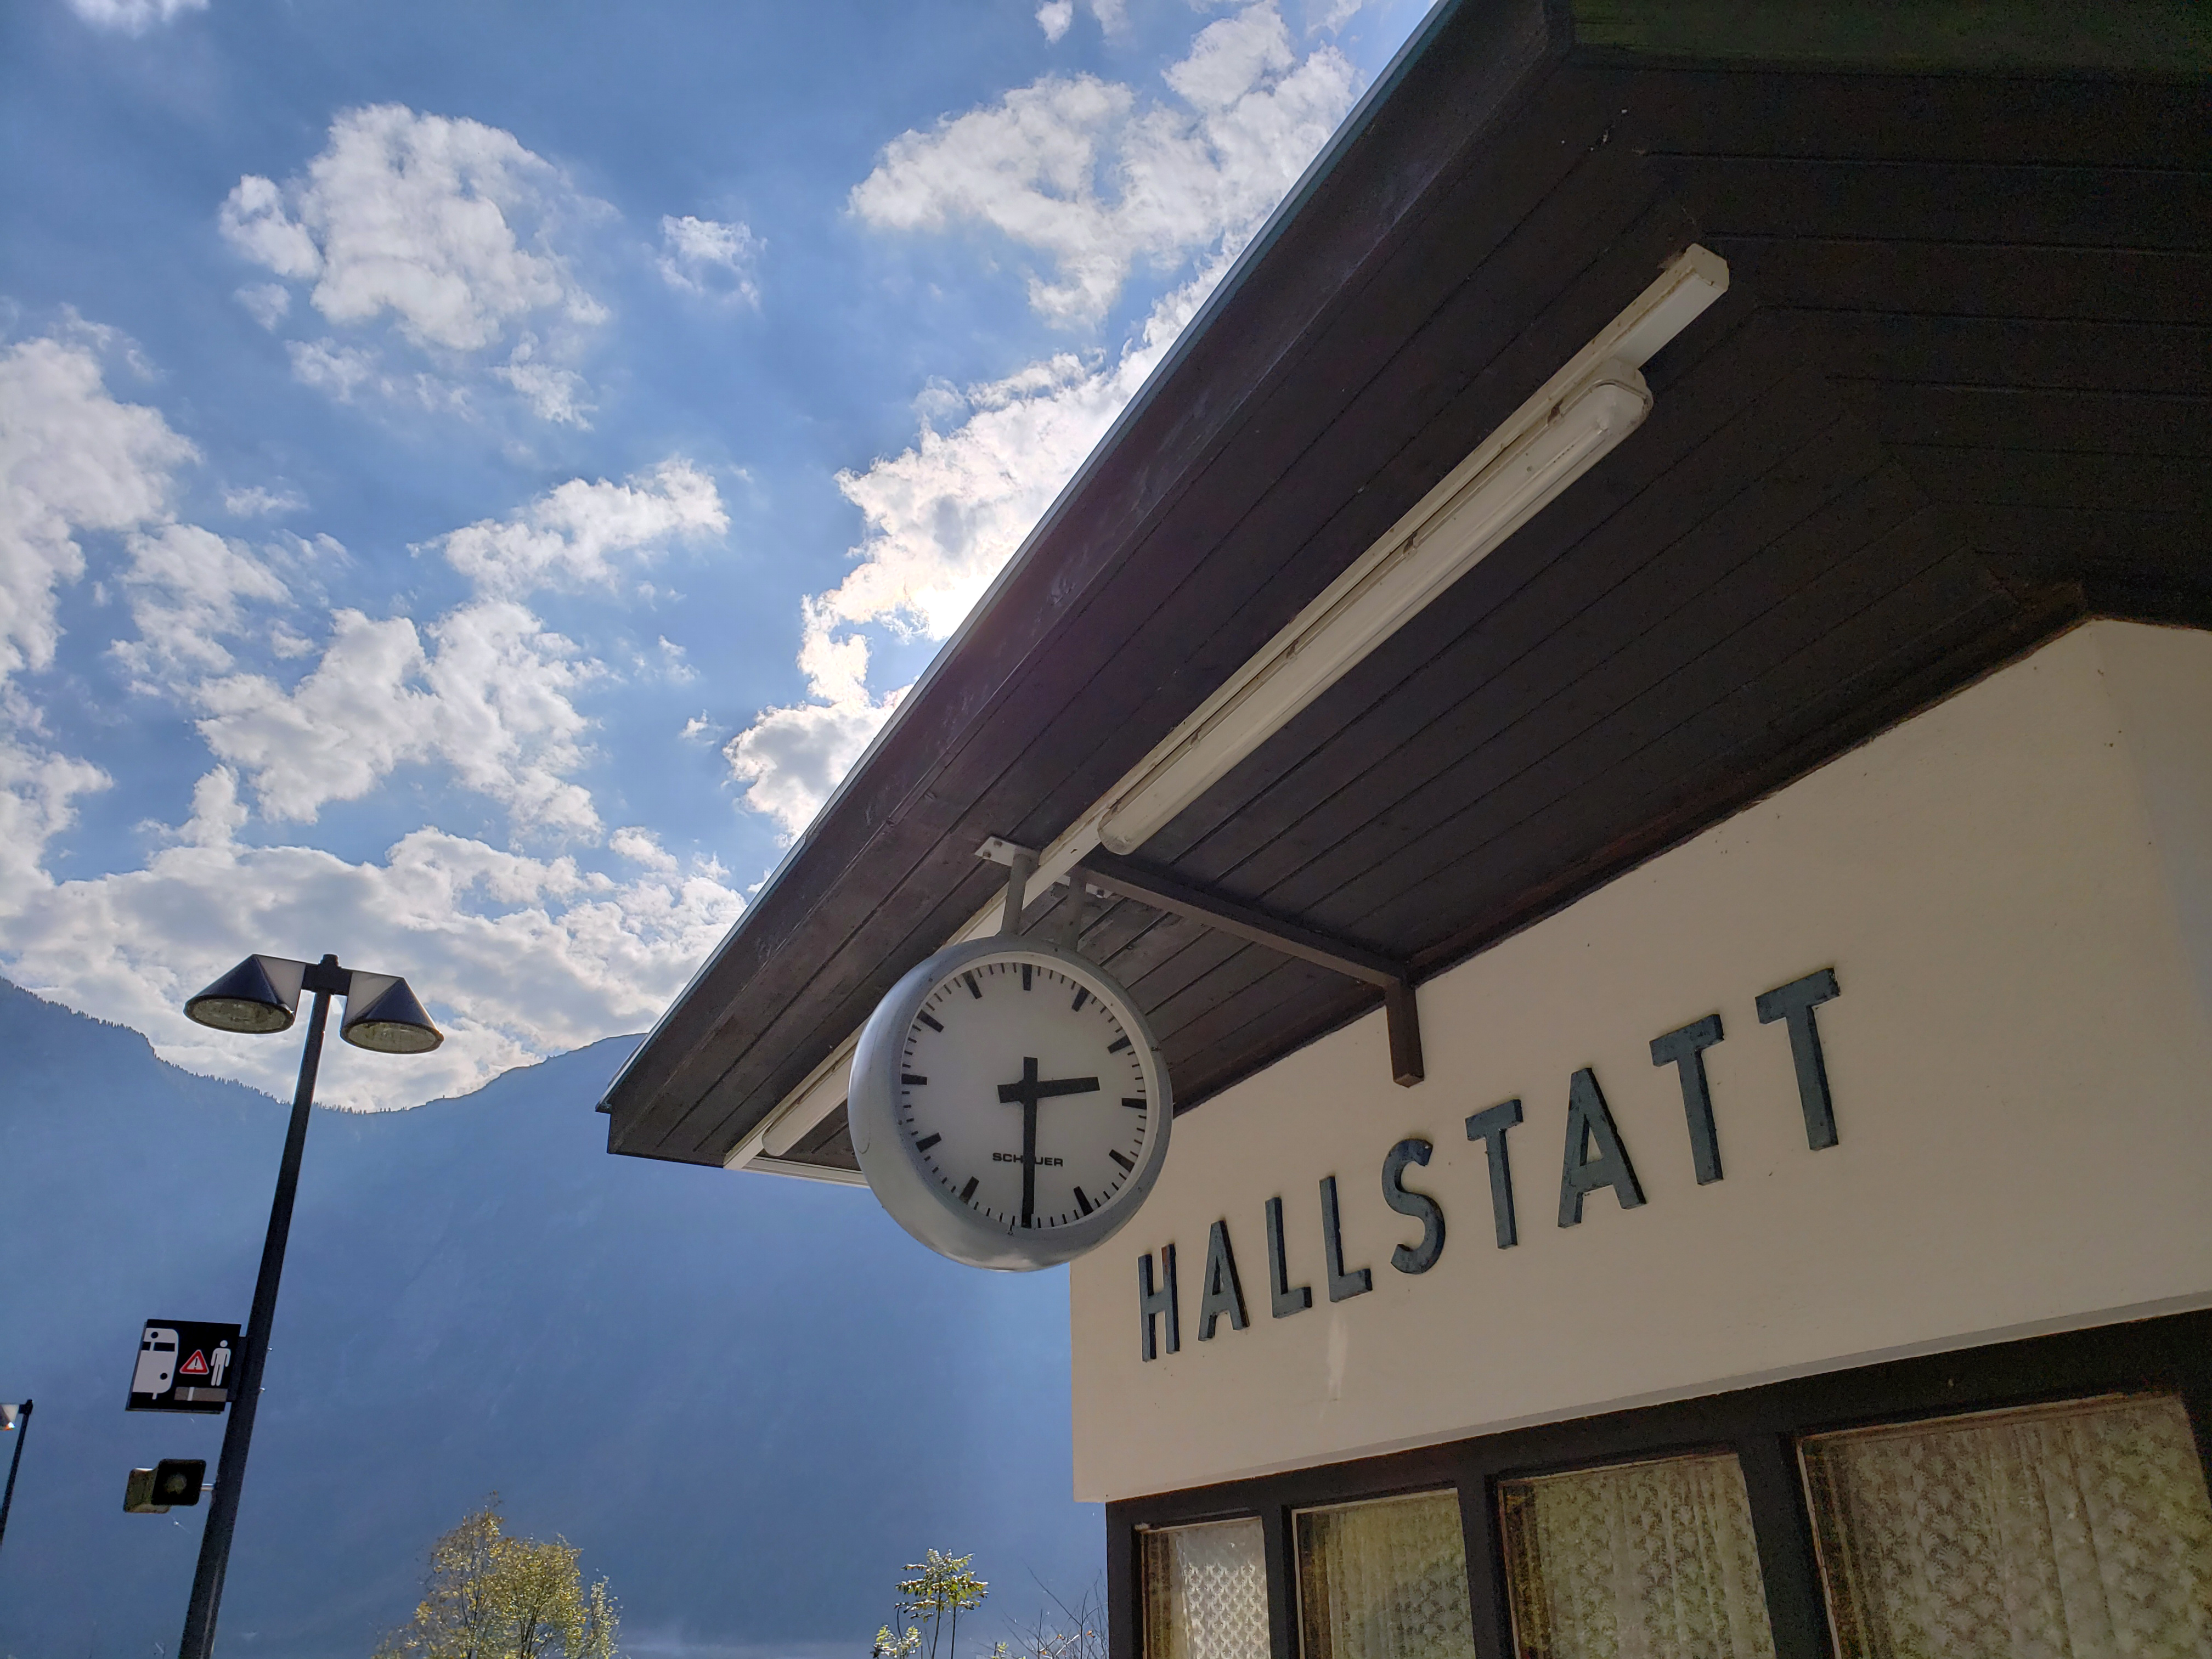 A Day Trip To Hallstatt, Austria - A Complete Guide